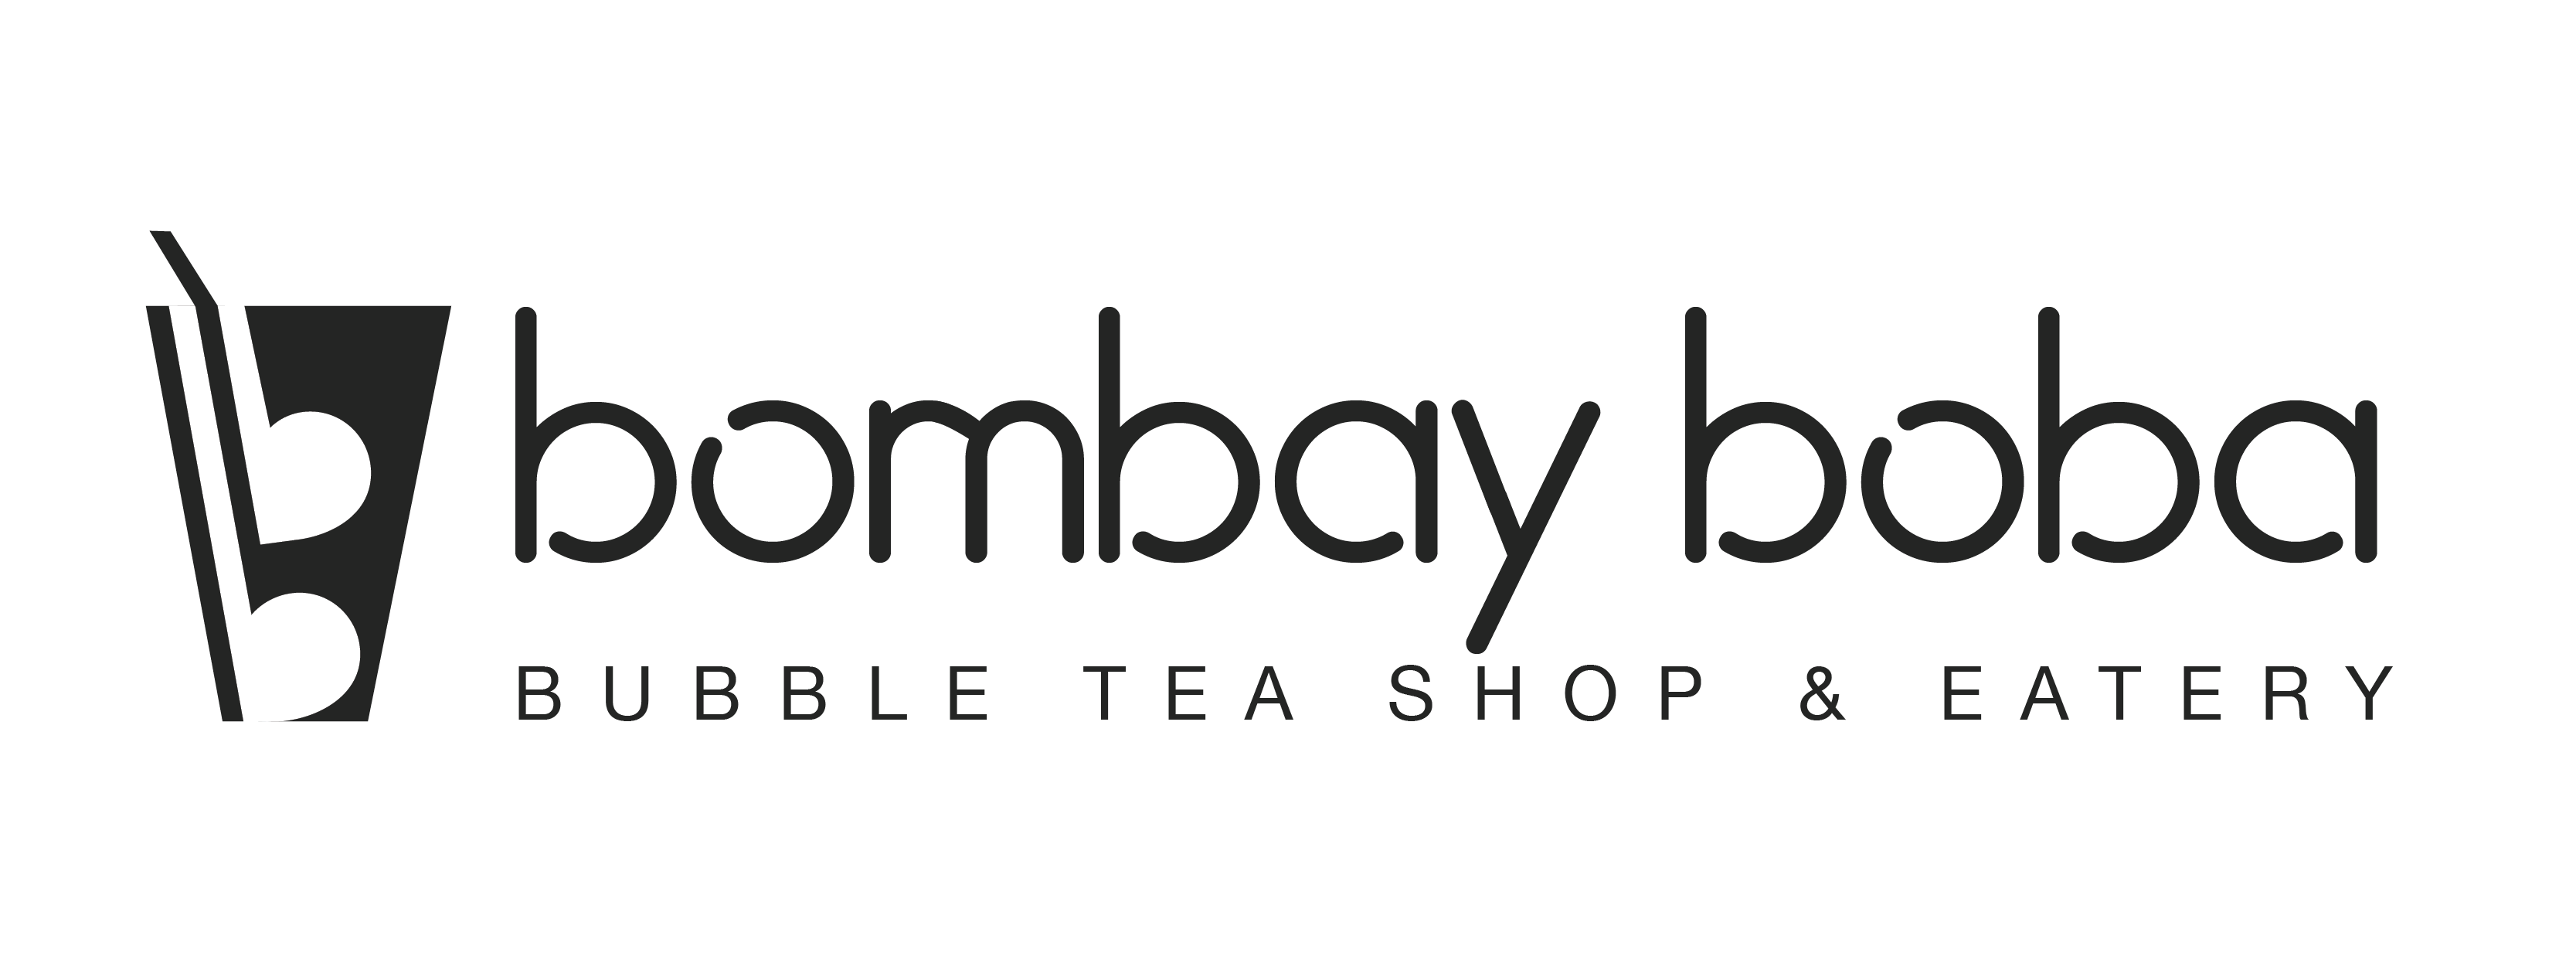 Bombay Boba-01